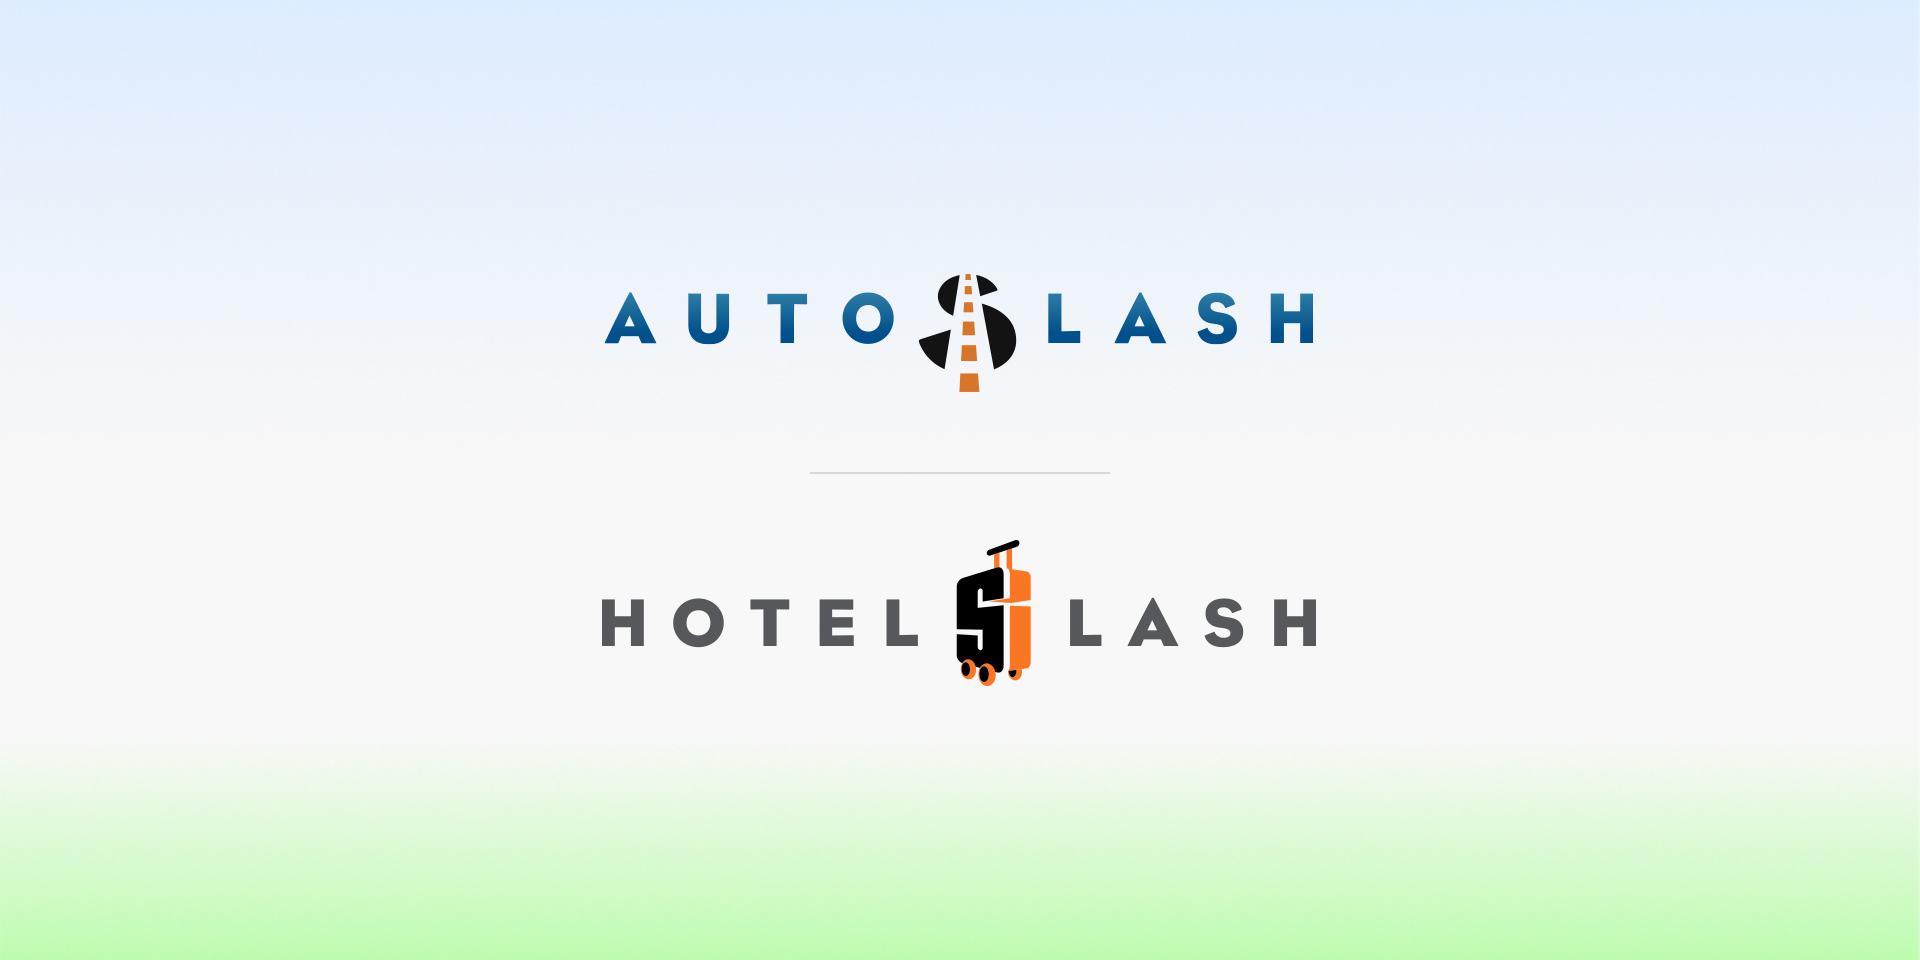 AutoSlash & HotelSlash Editorial Blogs